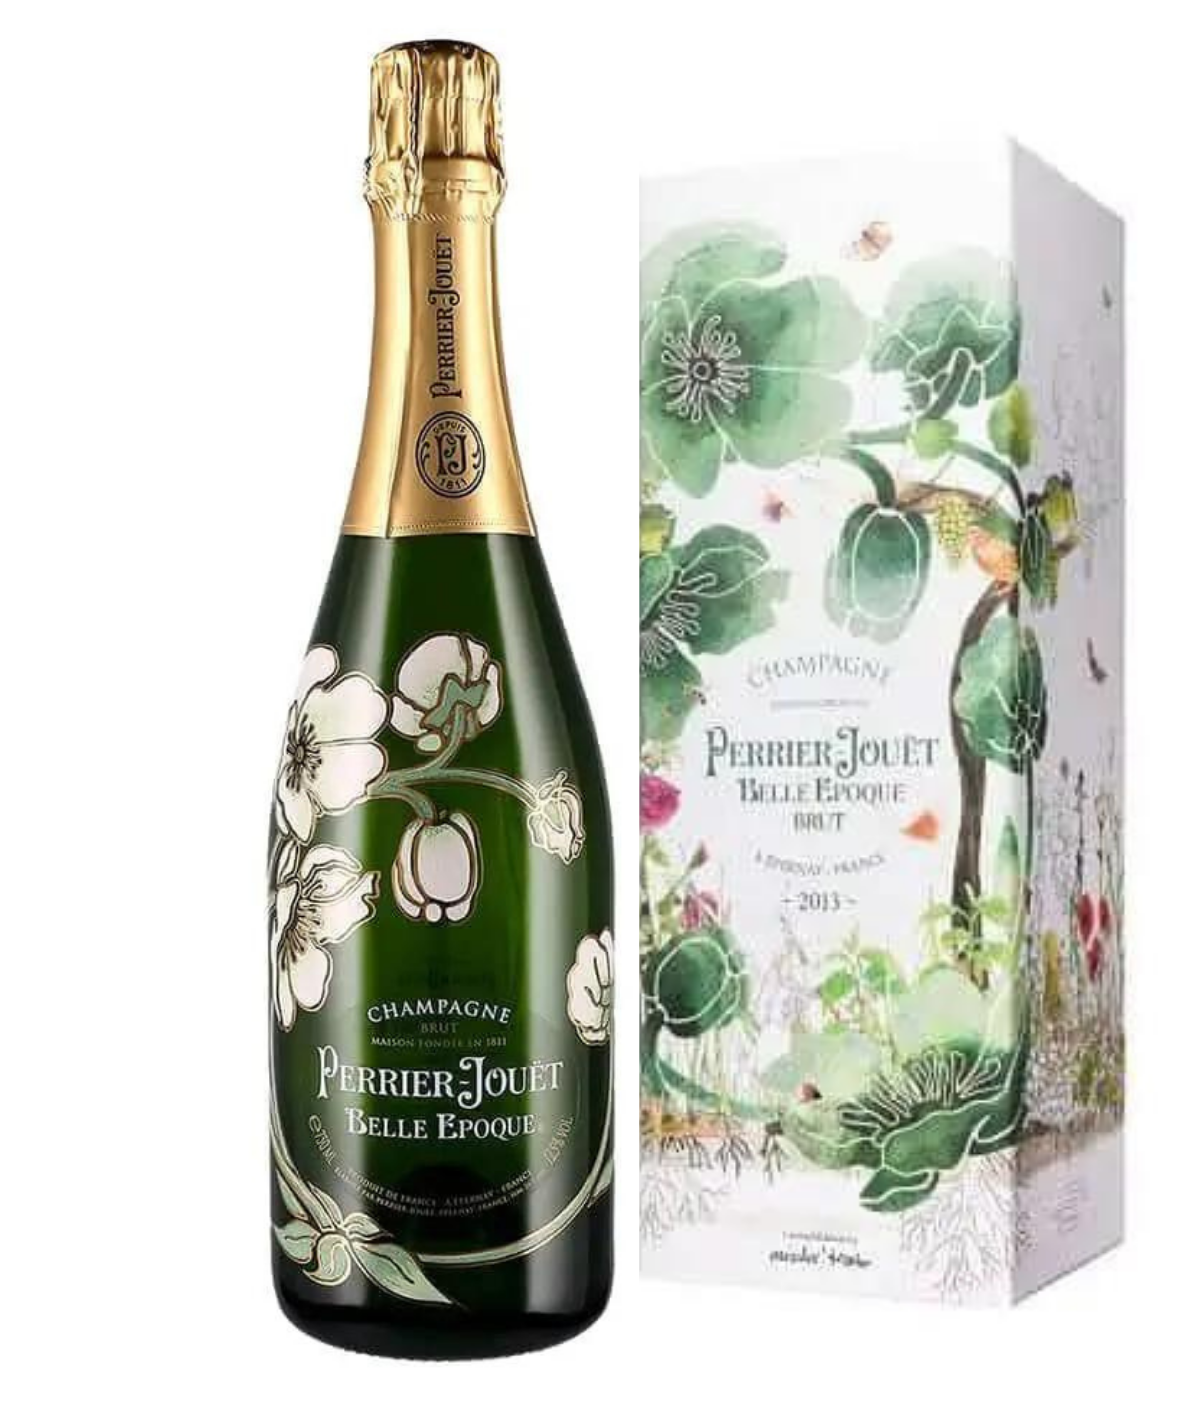 PERRIER-JOUËT champagne Belle Epoque 2013 vintage